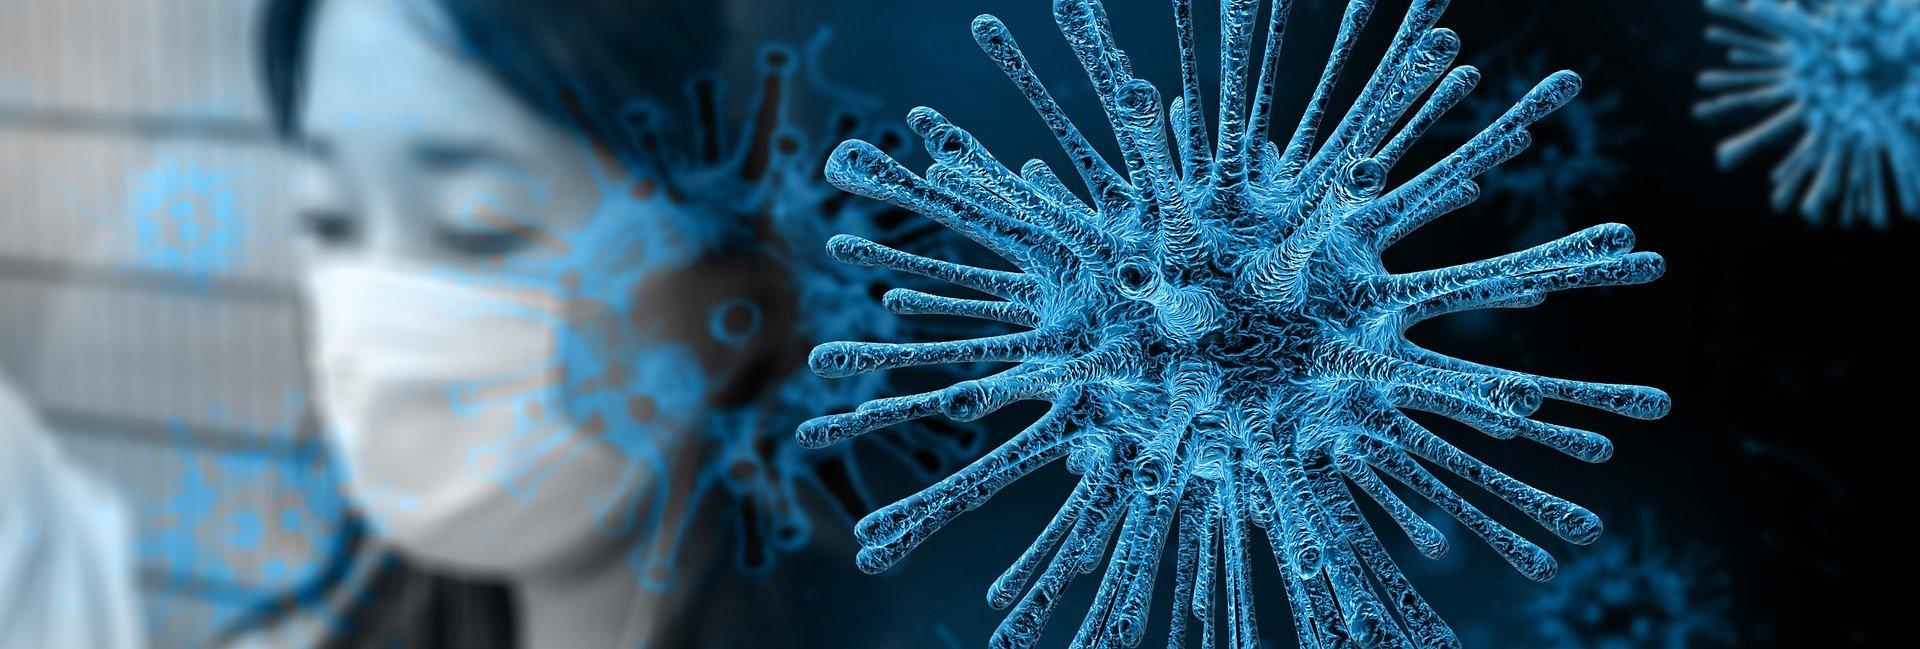 What's the latest on coronavirus in Italy